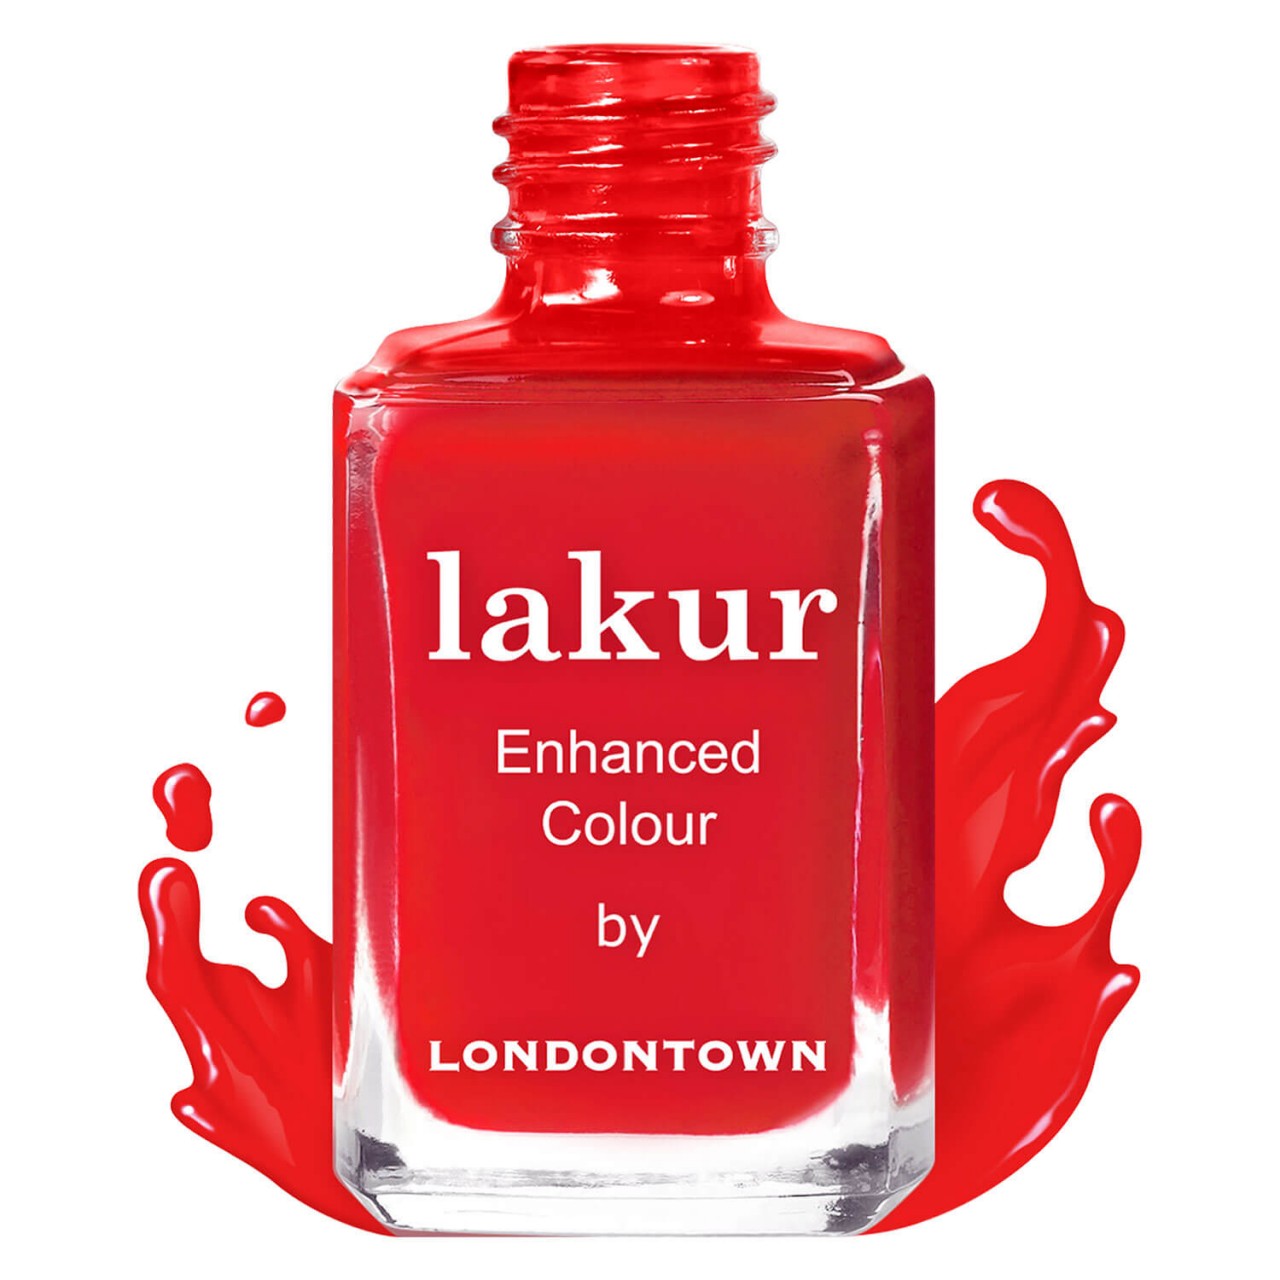 lakur - London Calling von Londontown